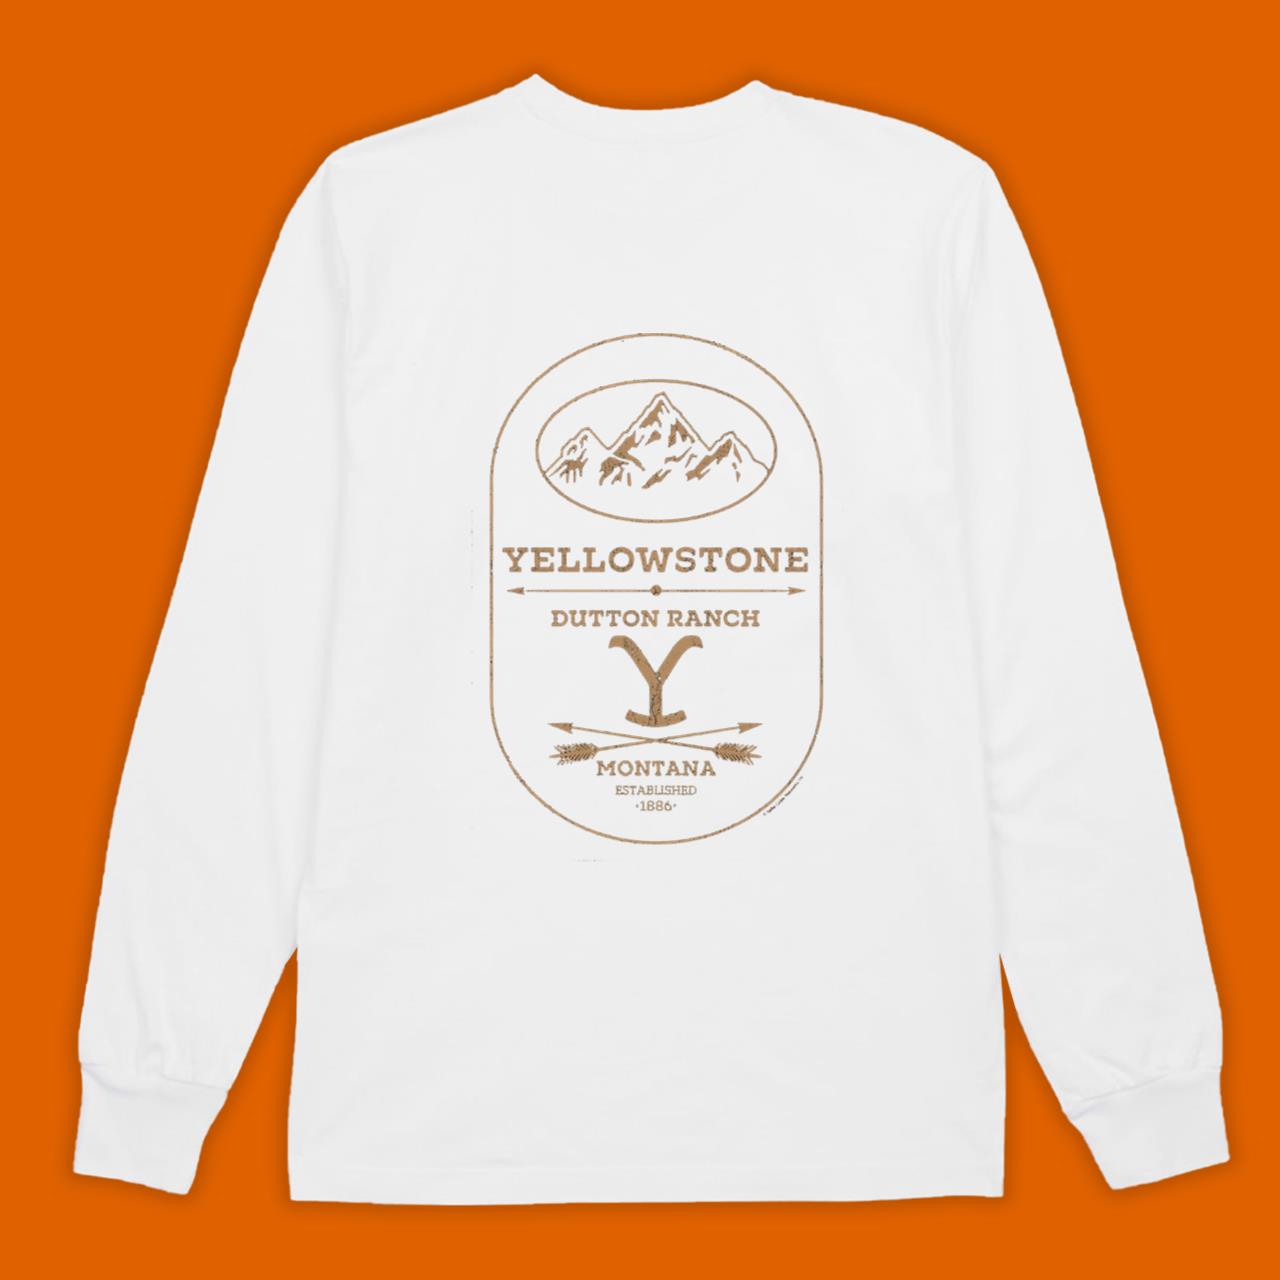 Yellowstone Dutton Ranch Graphic T-shirt